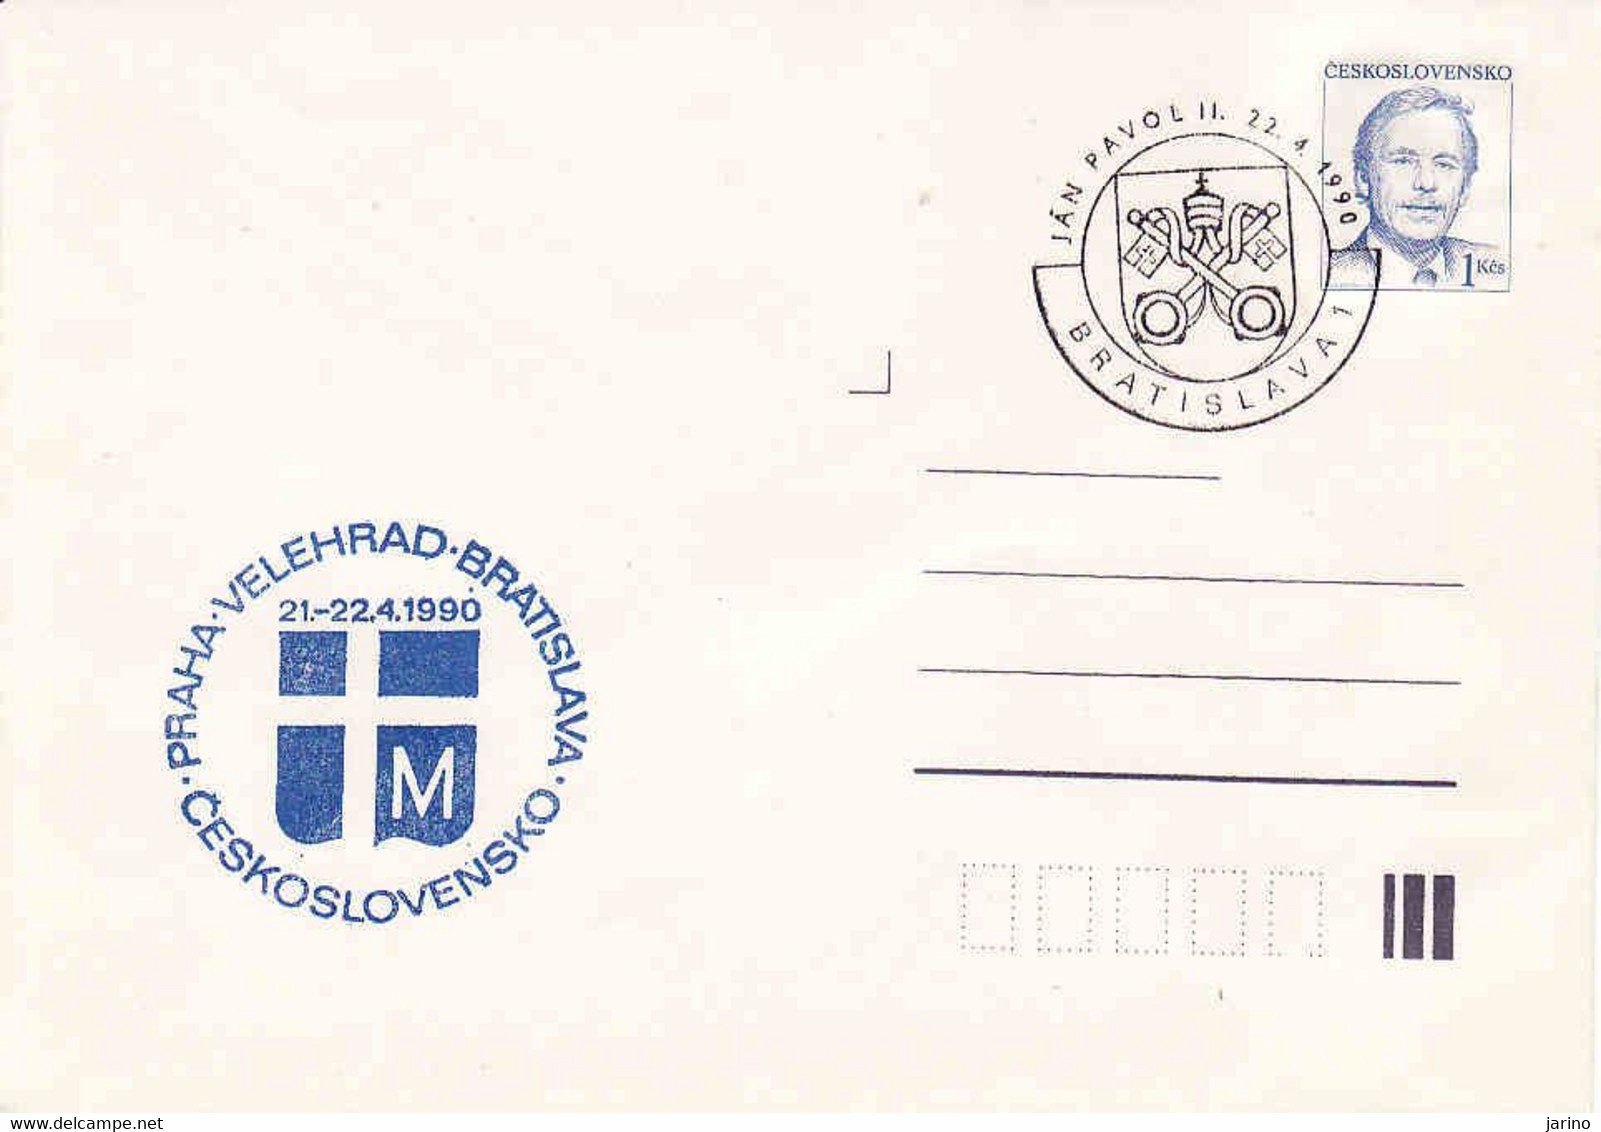 Czechoslovakia 1990, Praha - Velehrad, Bratislava, Visit John Pavul II 21. - 22.4 .1990 - Enveloppes